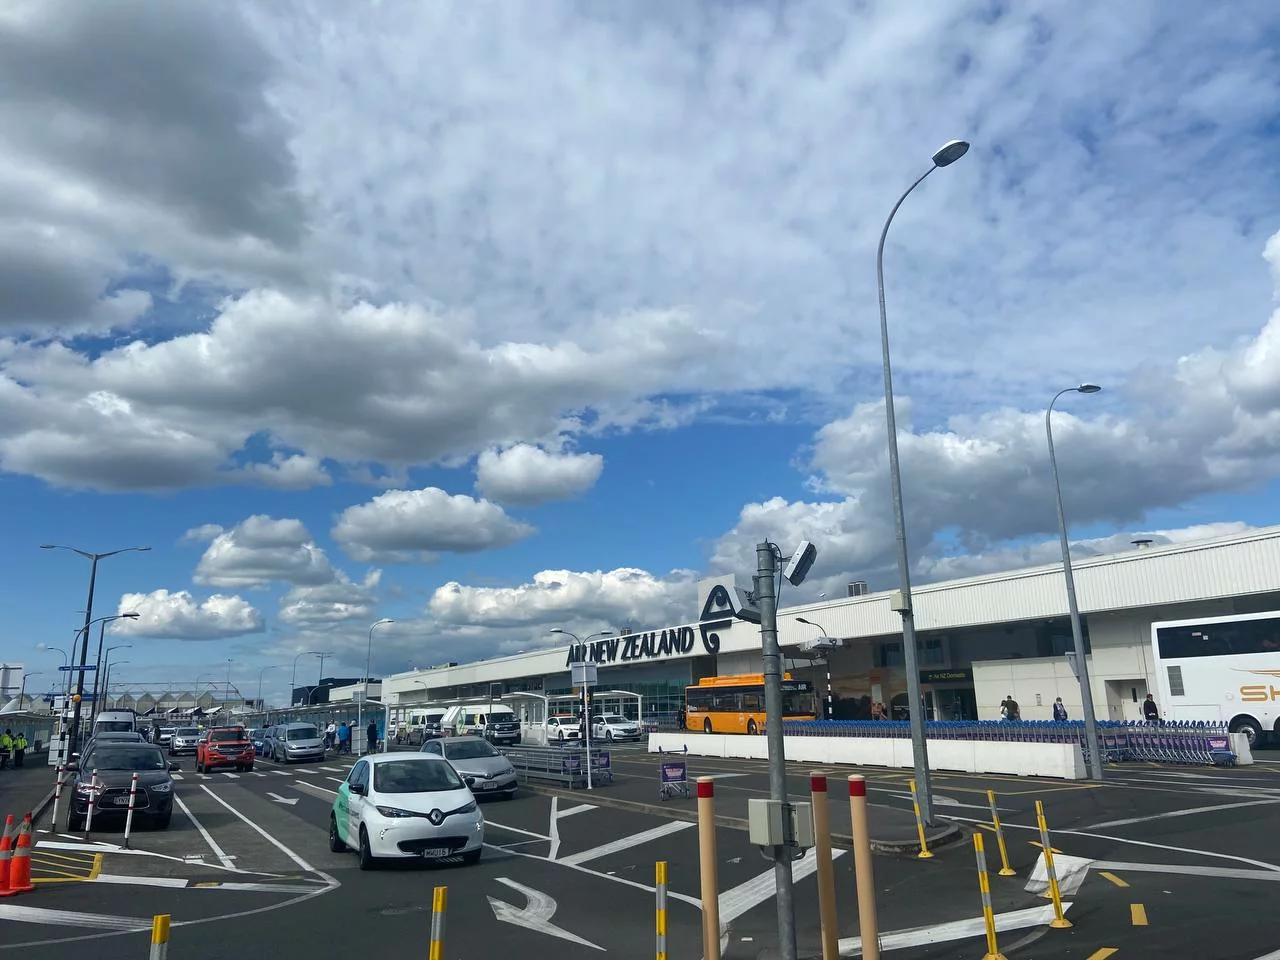 New Zealand airport